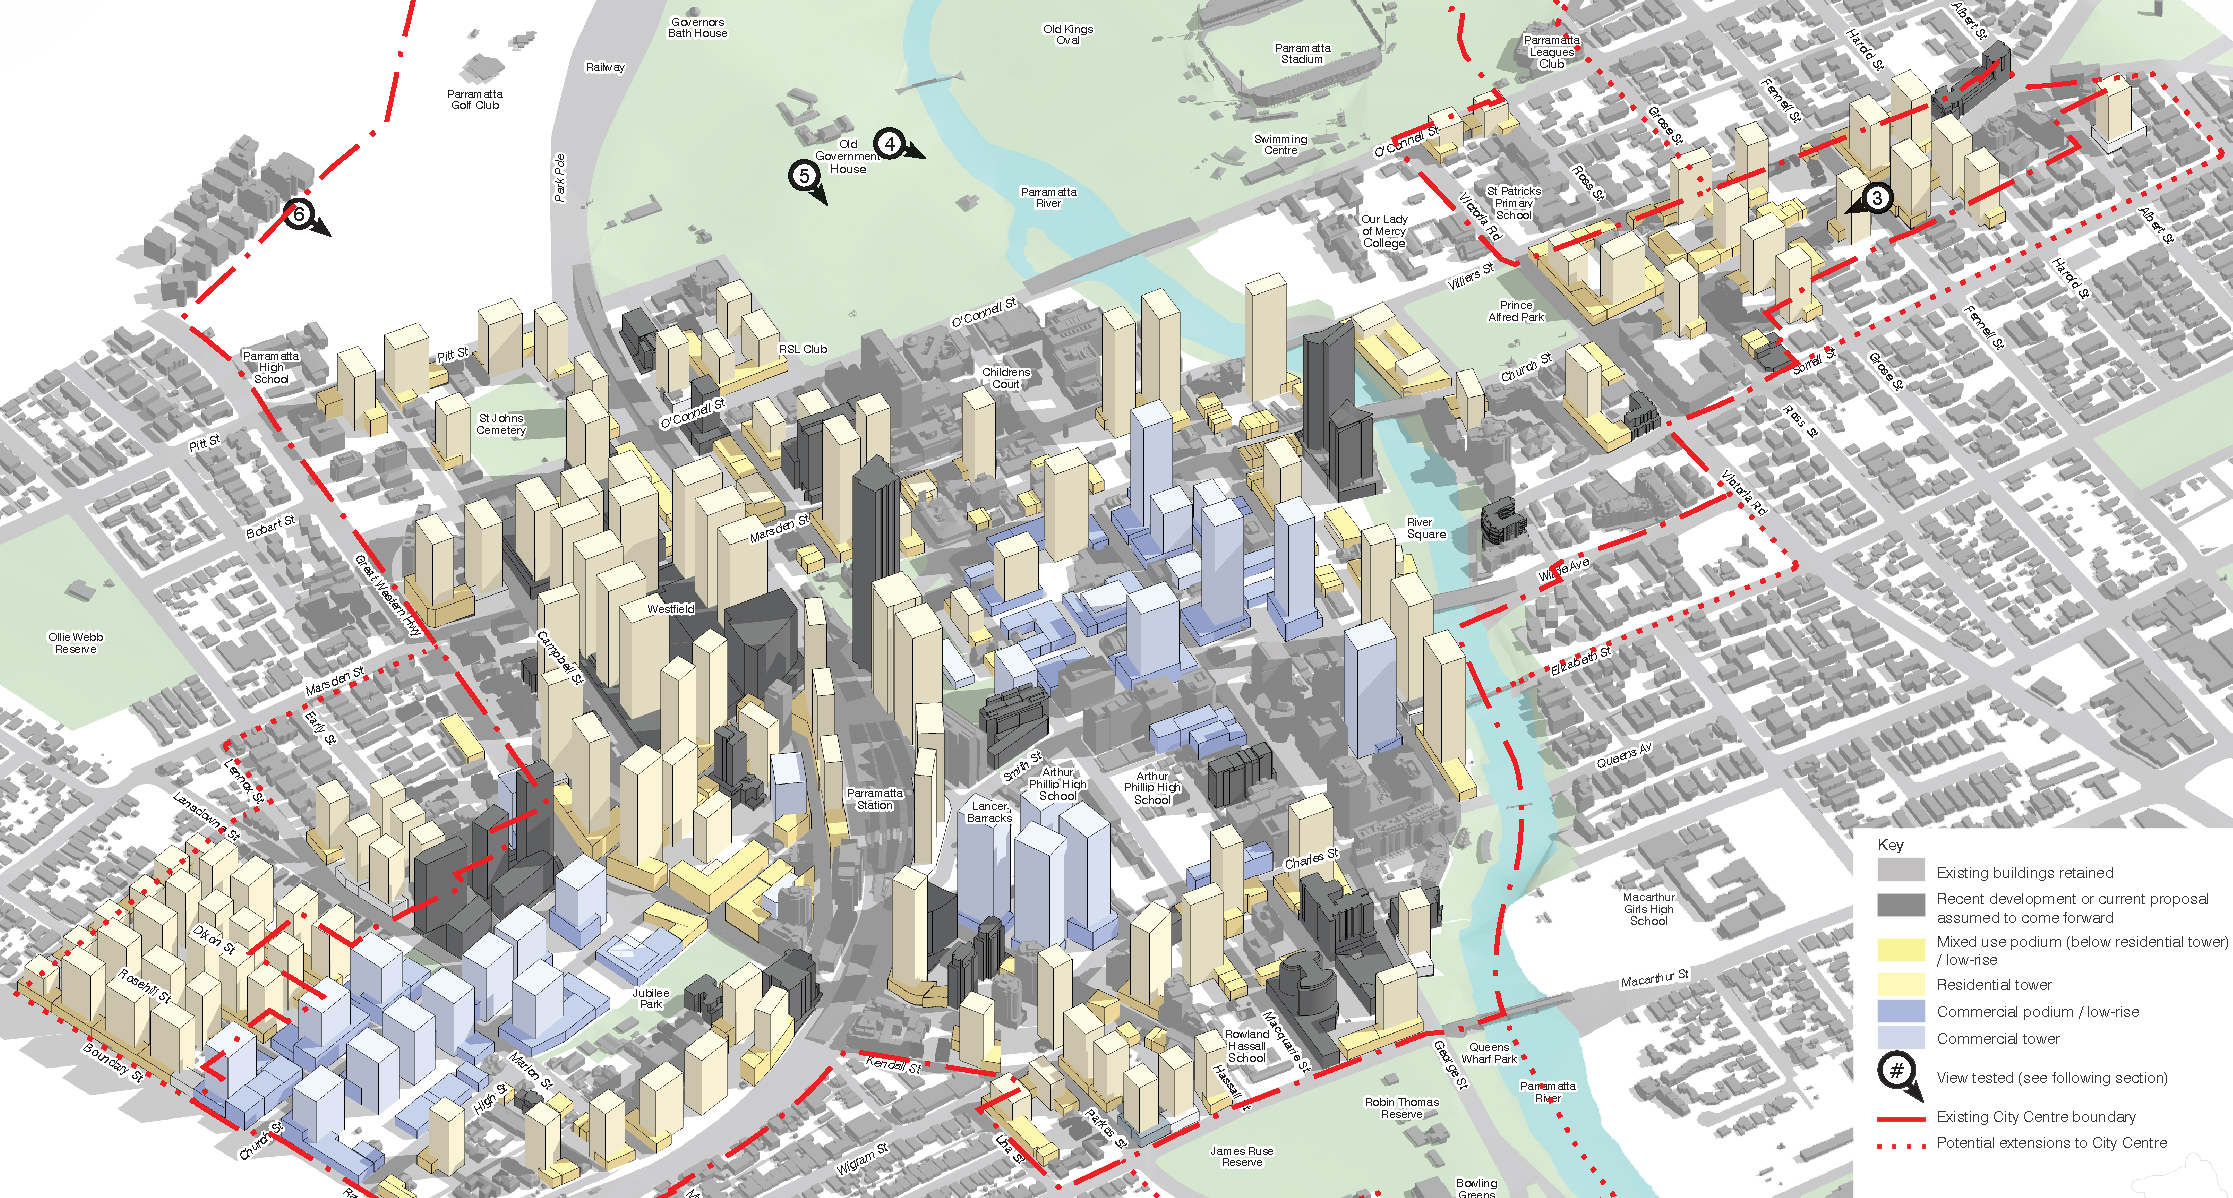 Urban planning for skinny towers - Parramatta City Centre Planning Framework.